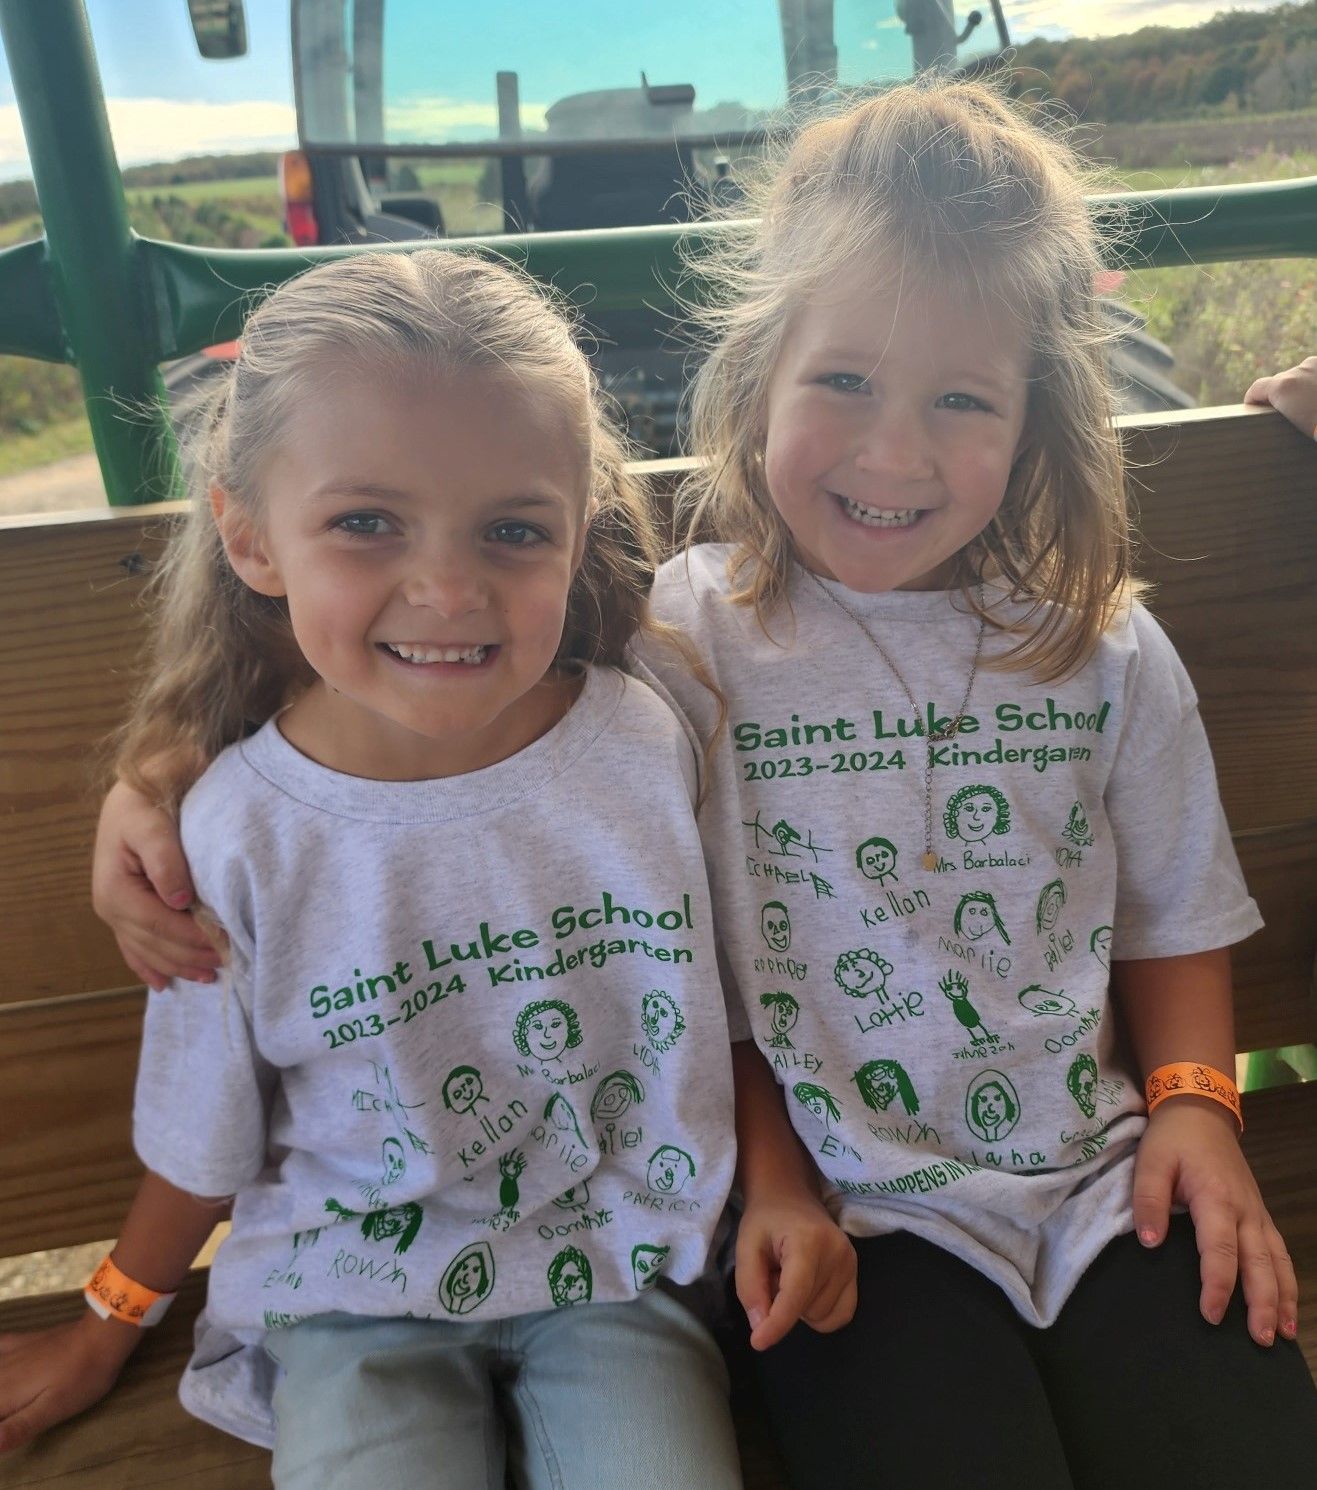 Two little girls wearing saint luke school shirts are sitting on a bench